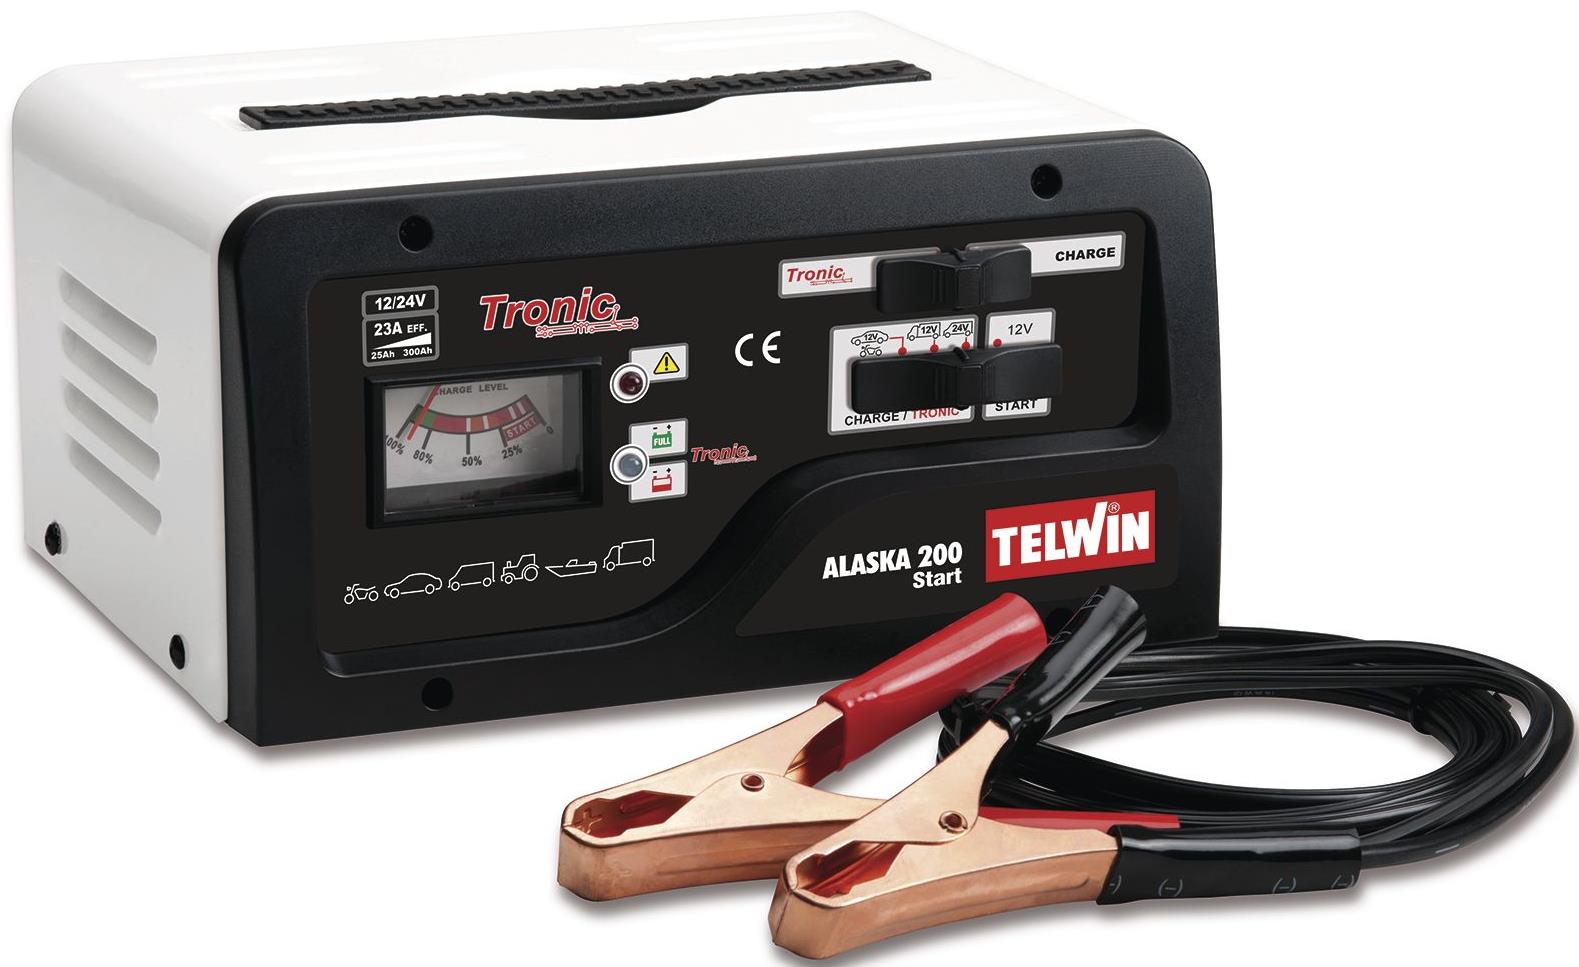 Chargeur de batterie Telwin Alaska 200_4598.jpg